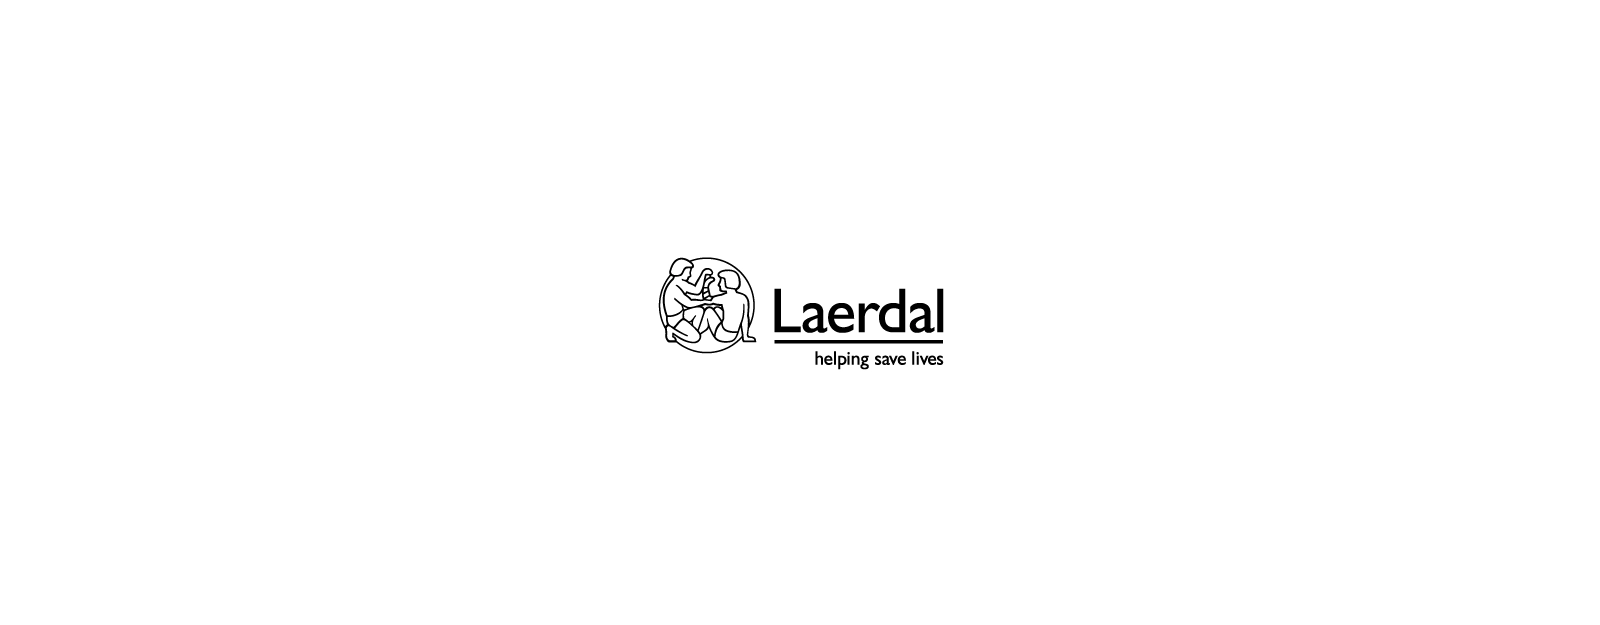 Laerdal